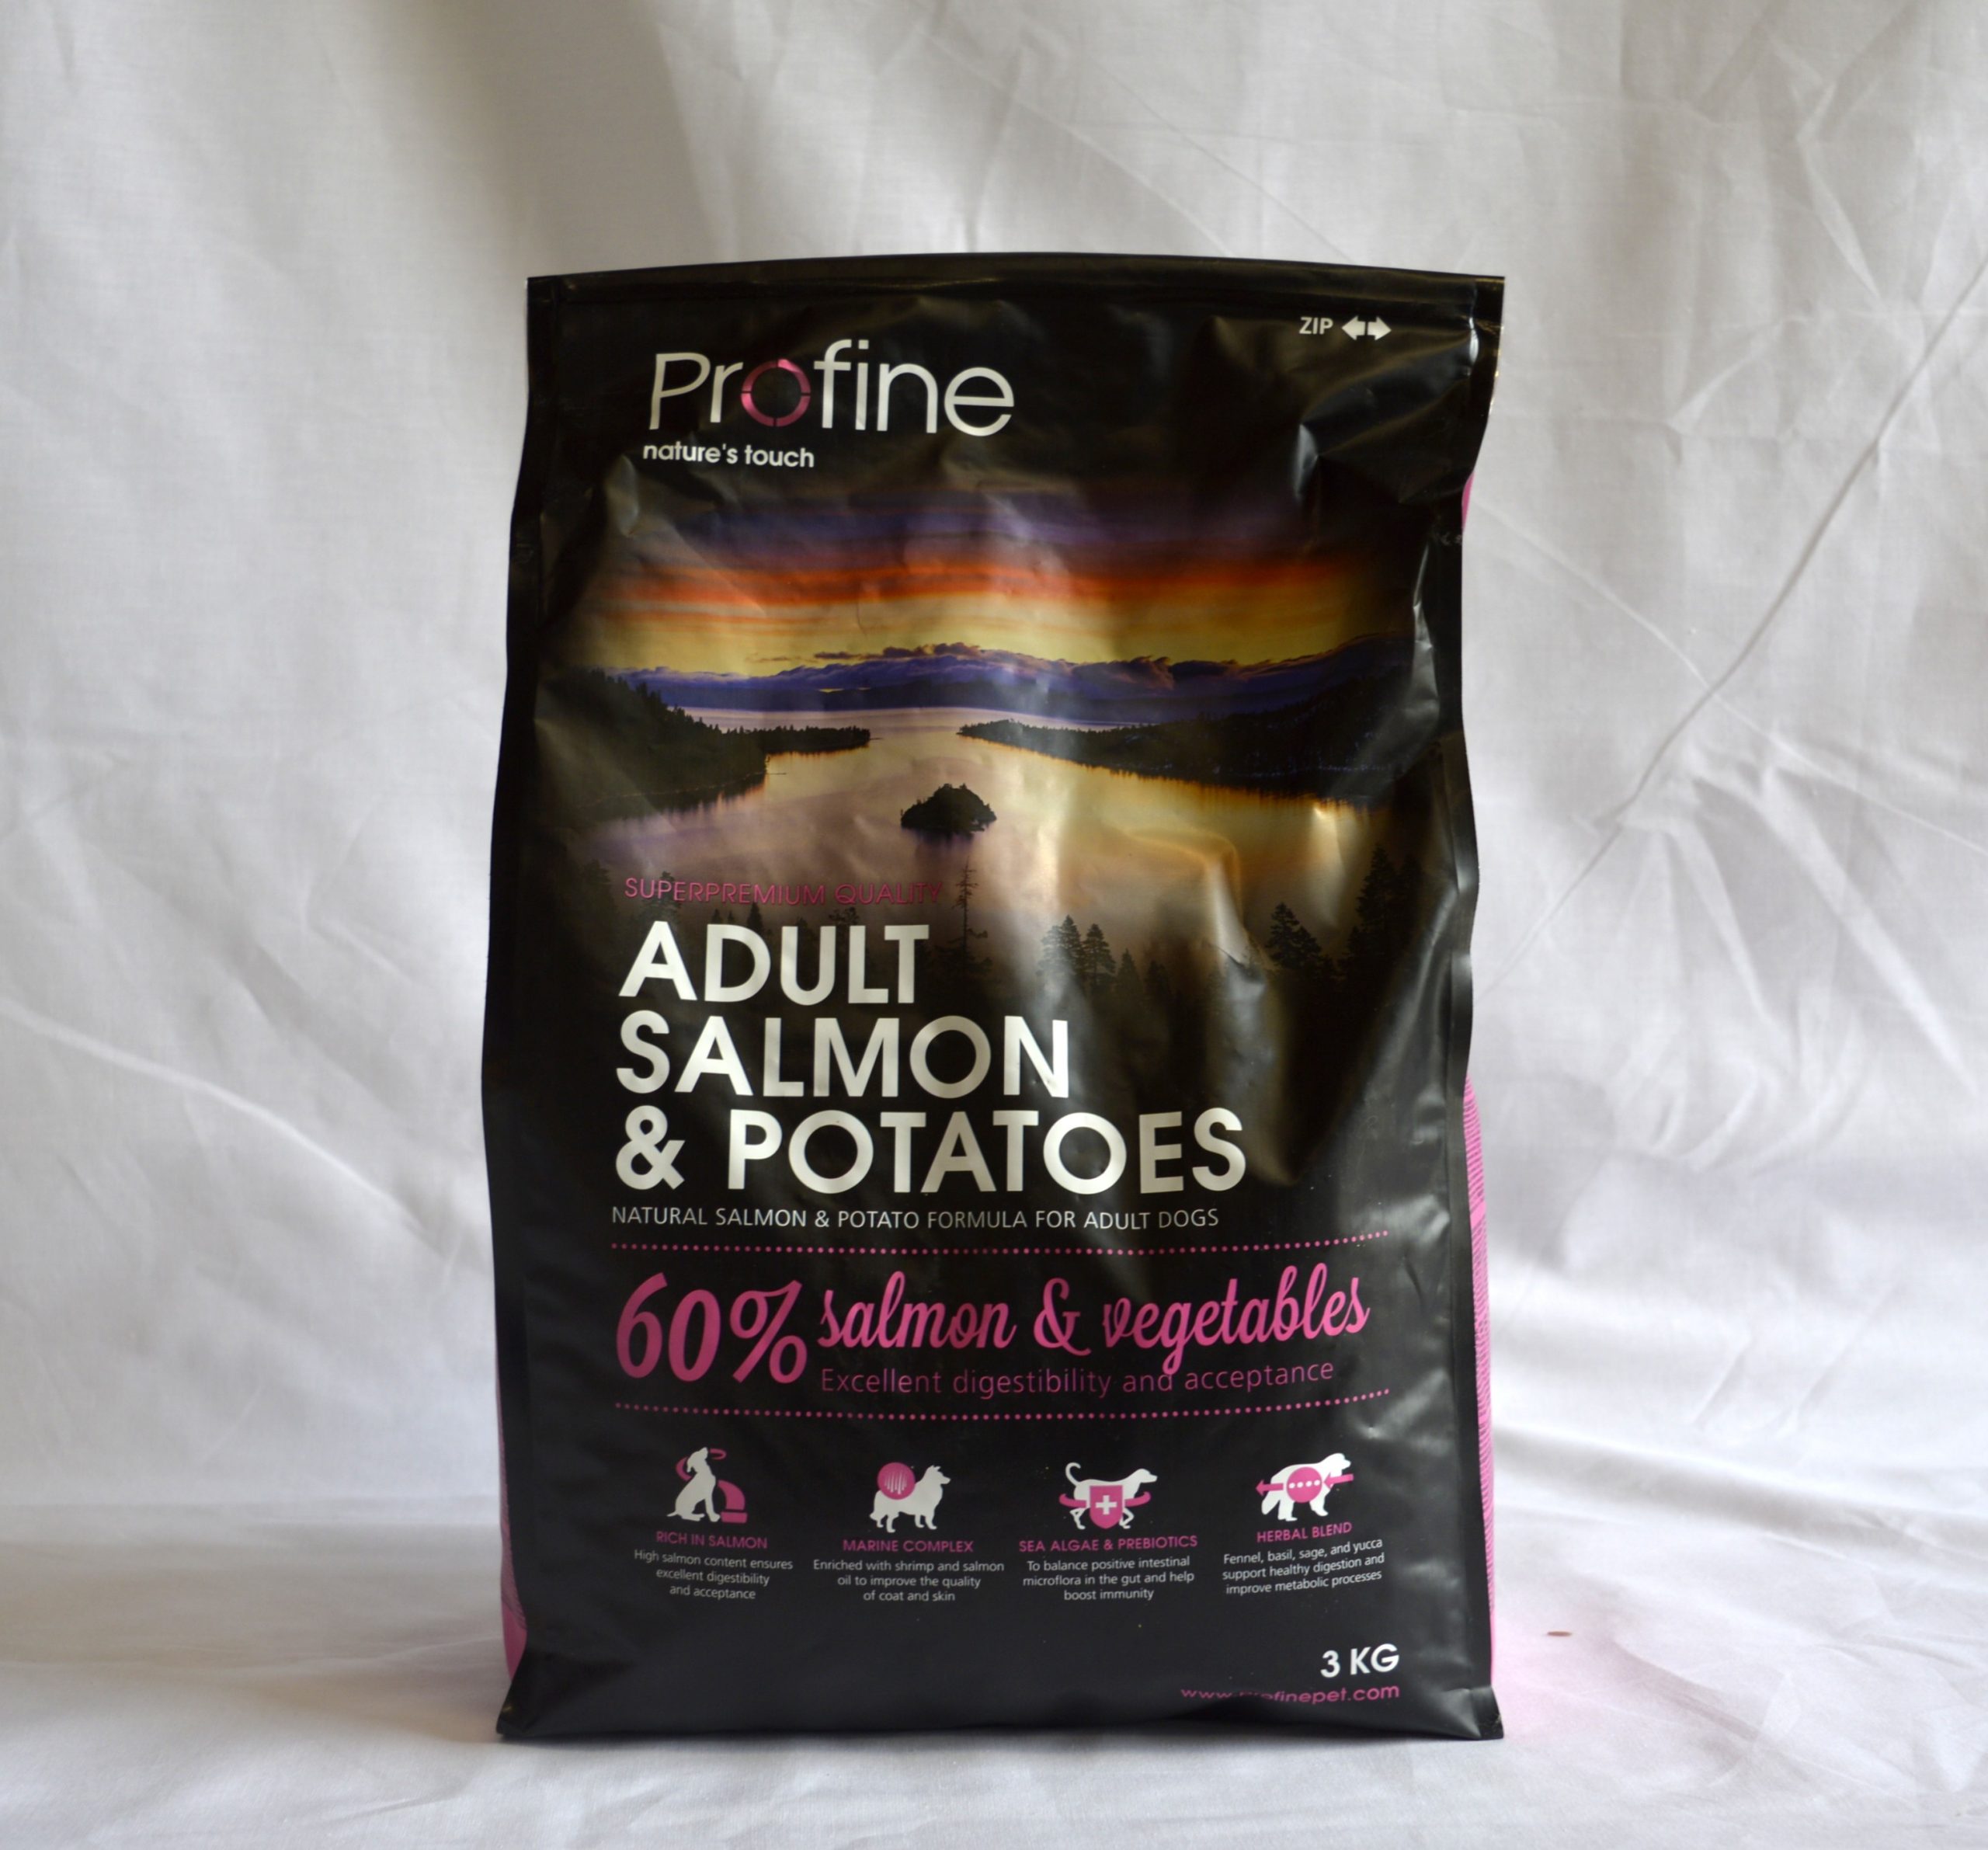 Profine Salmon & Potatoes Adult-3kg